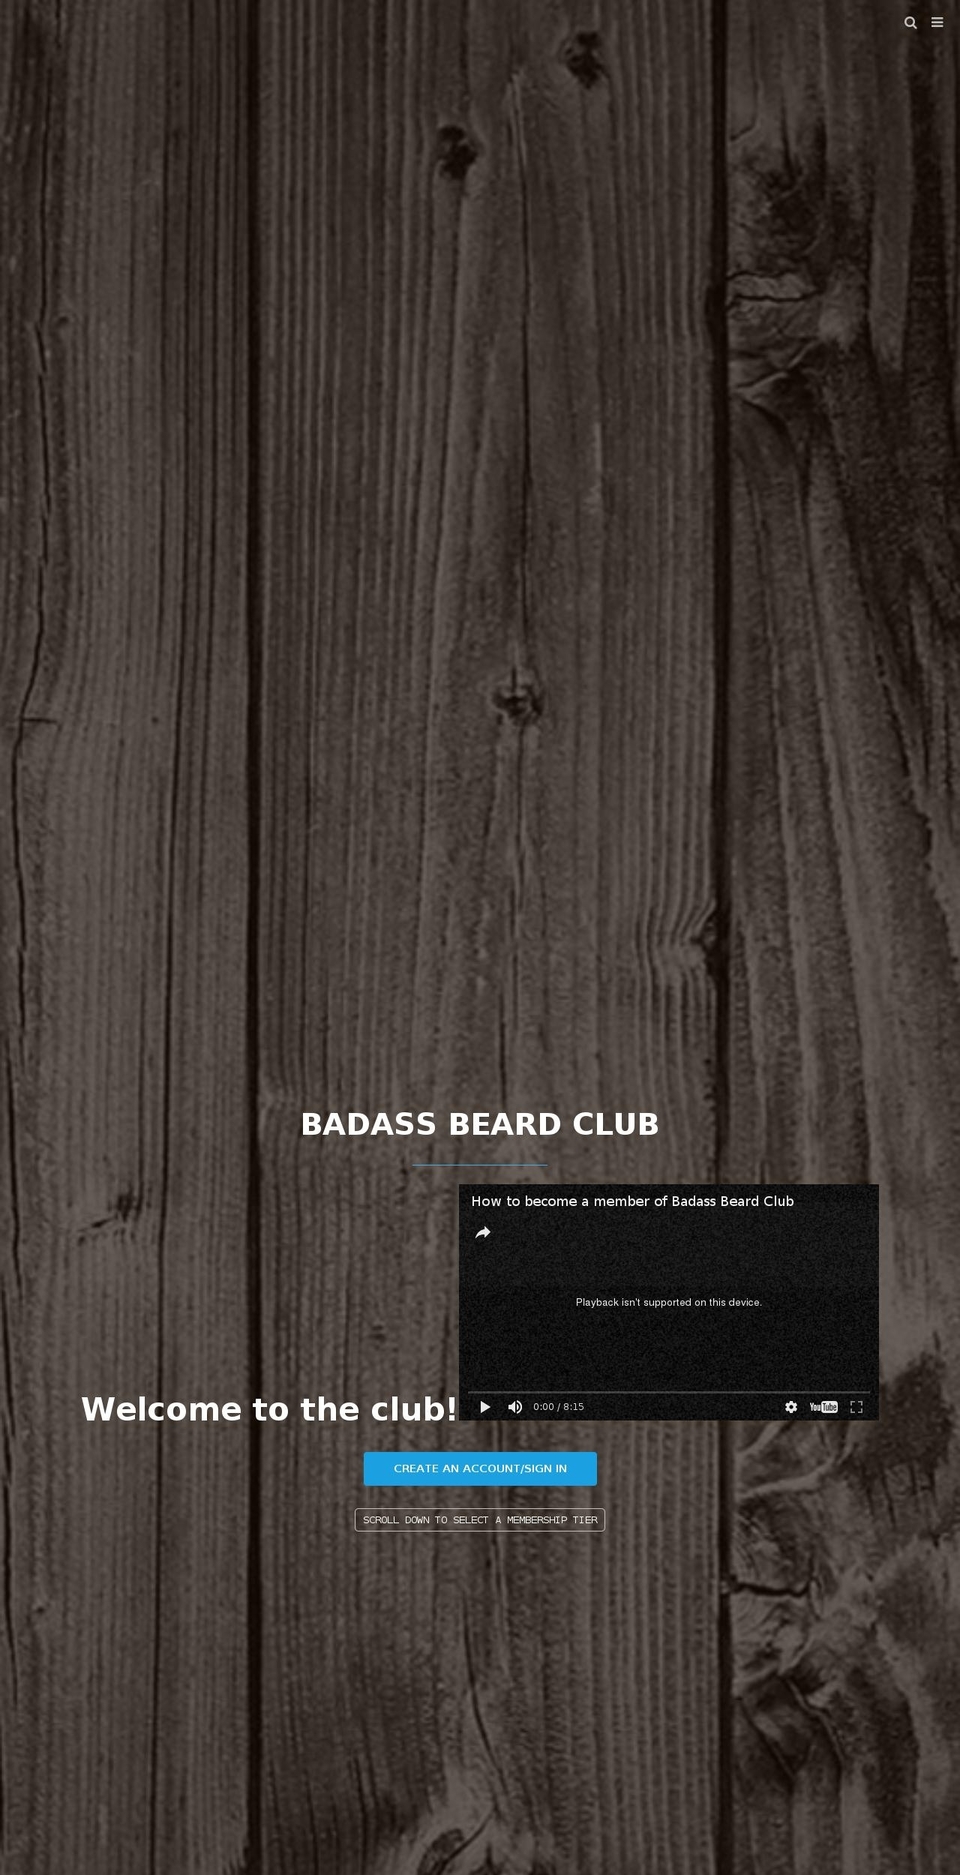 California Shopify theme site example badassbeardclub.com